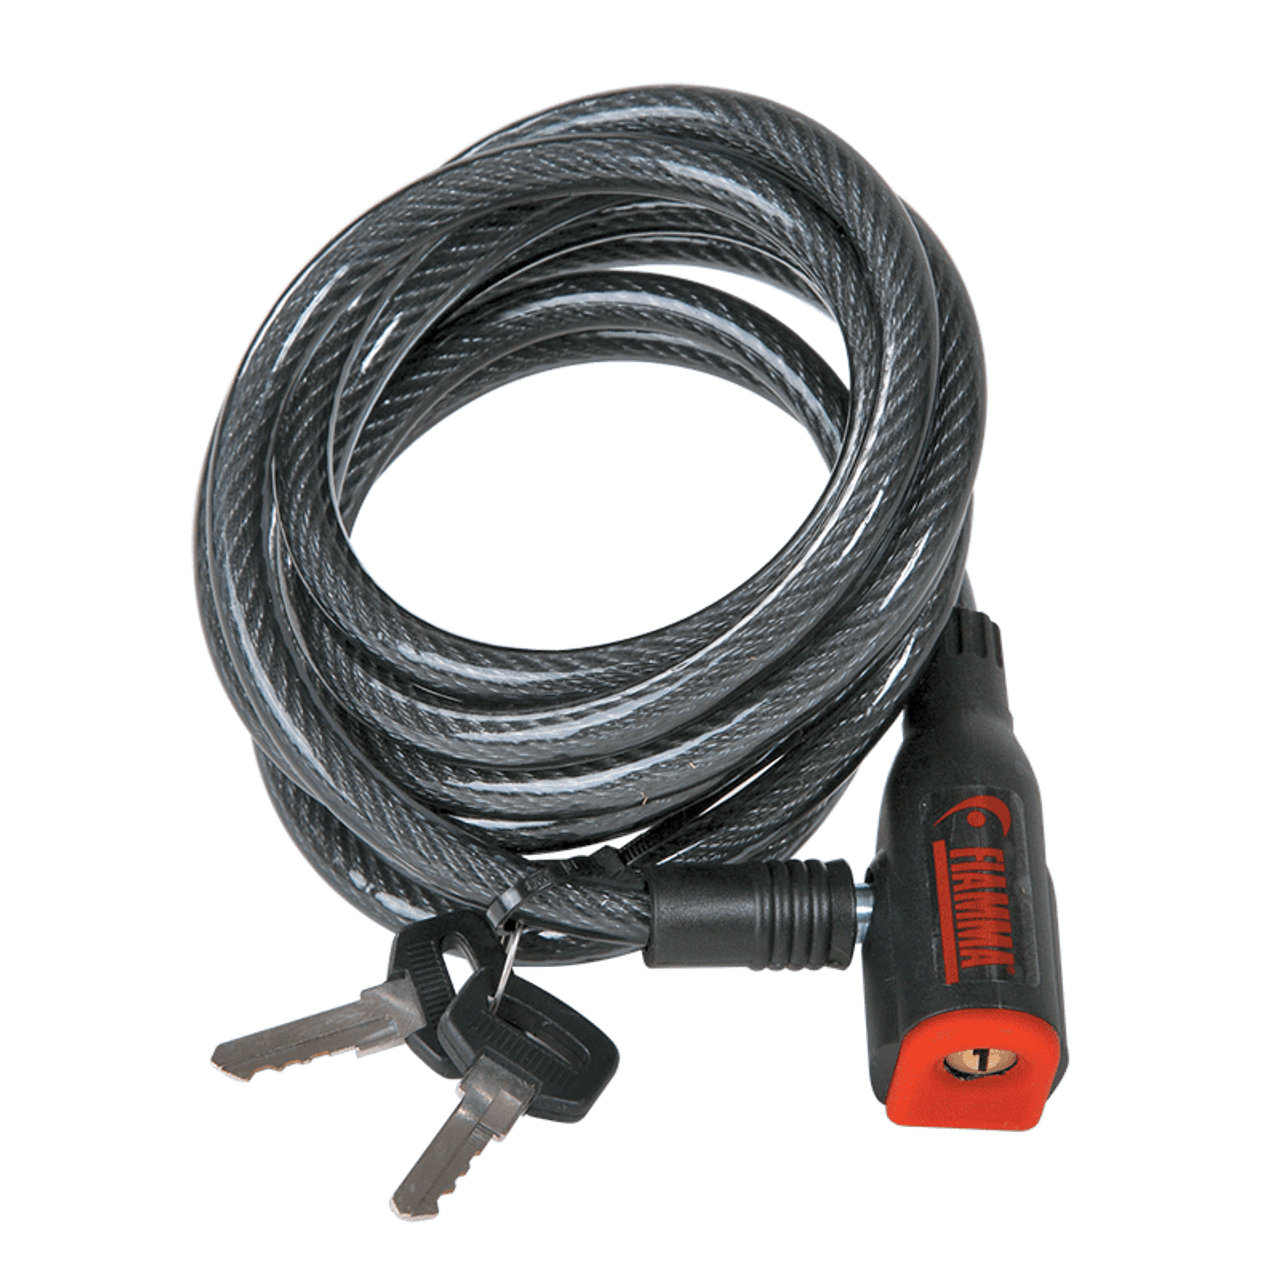 Fiamma Carry Bike Cable Lock 2.5M. 98656-338 | 350-02252